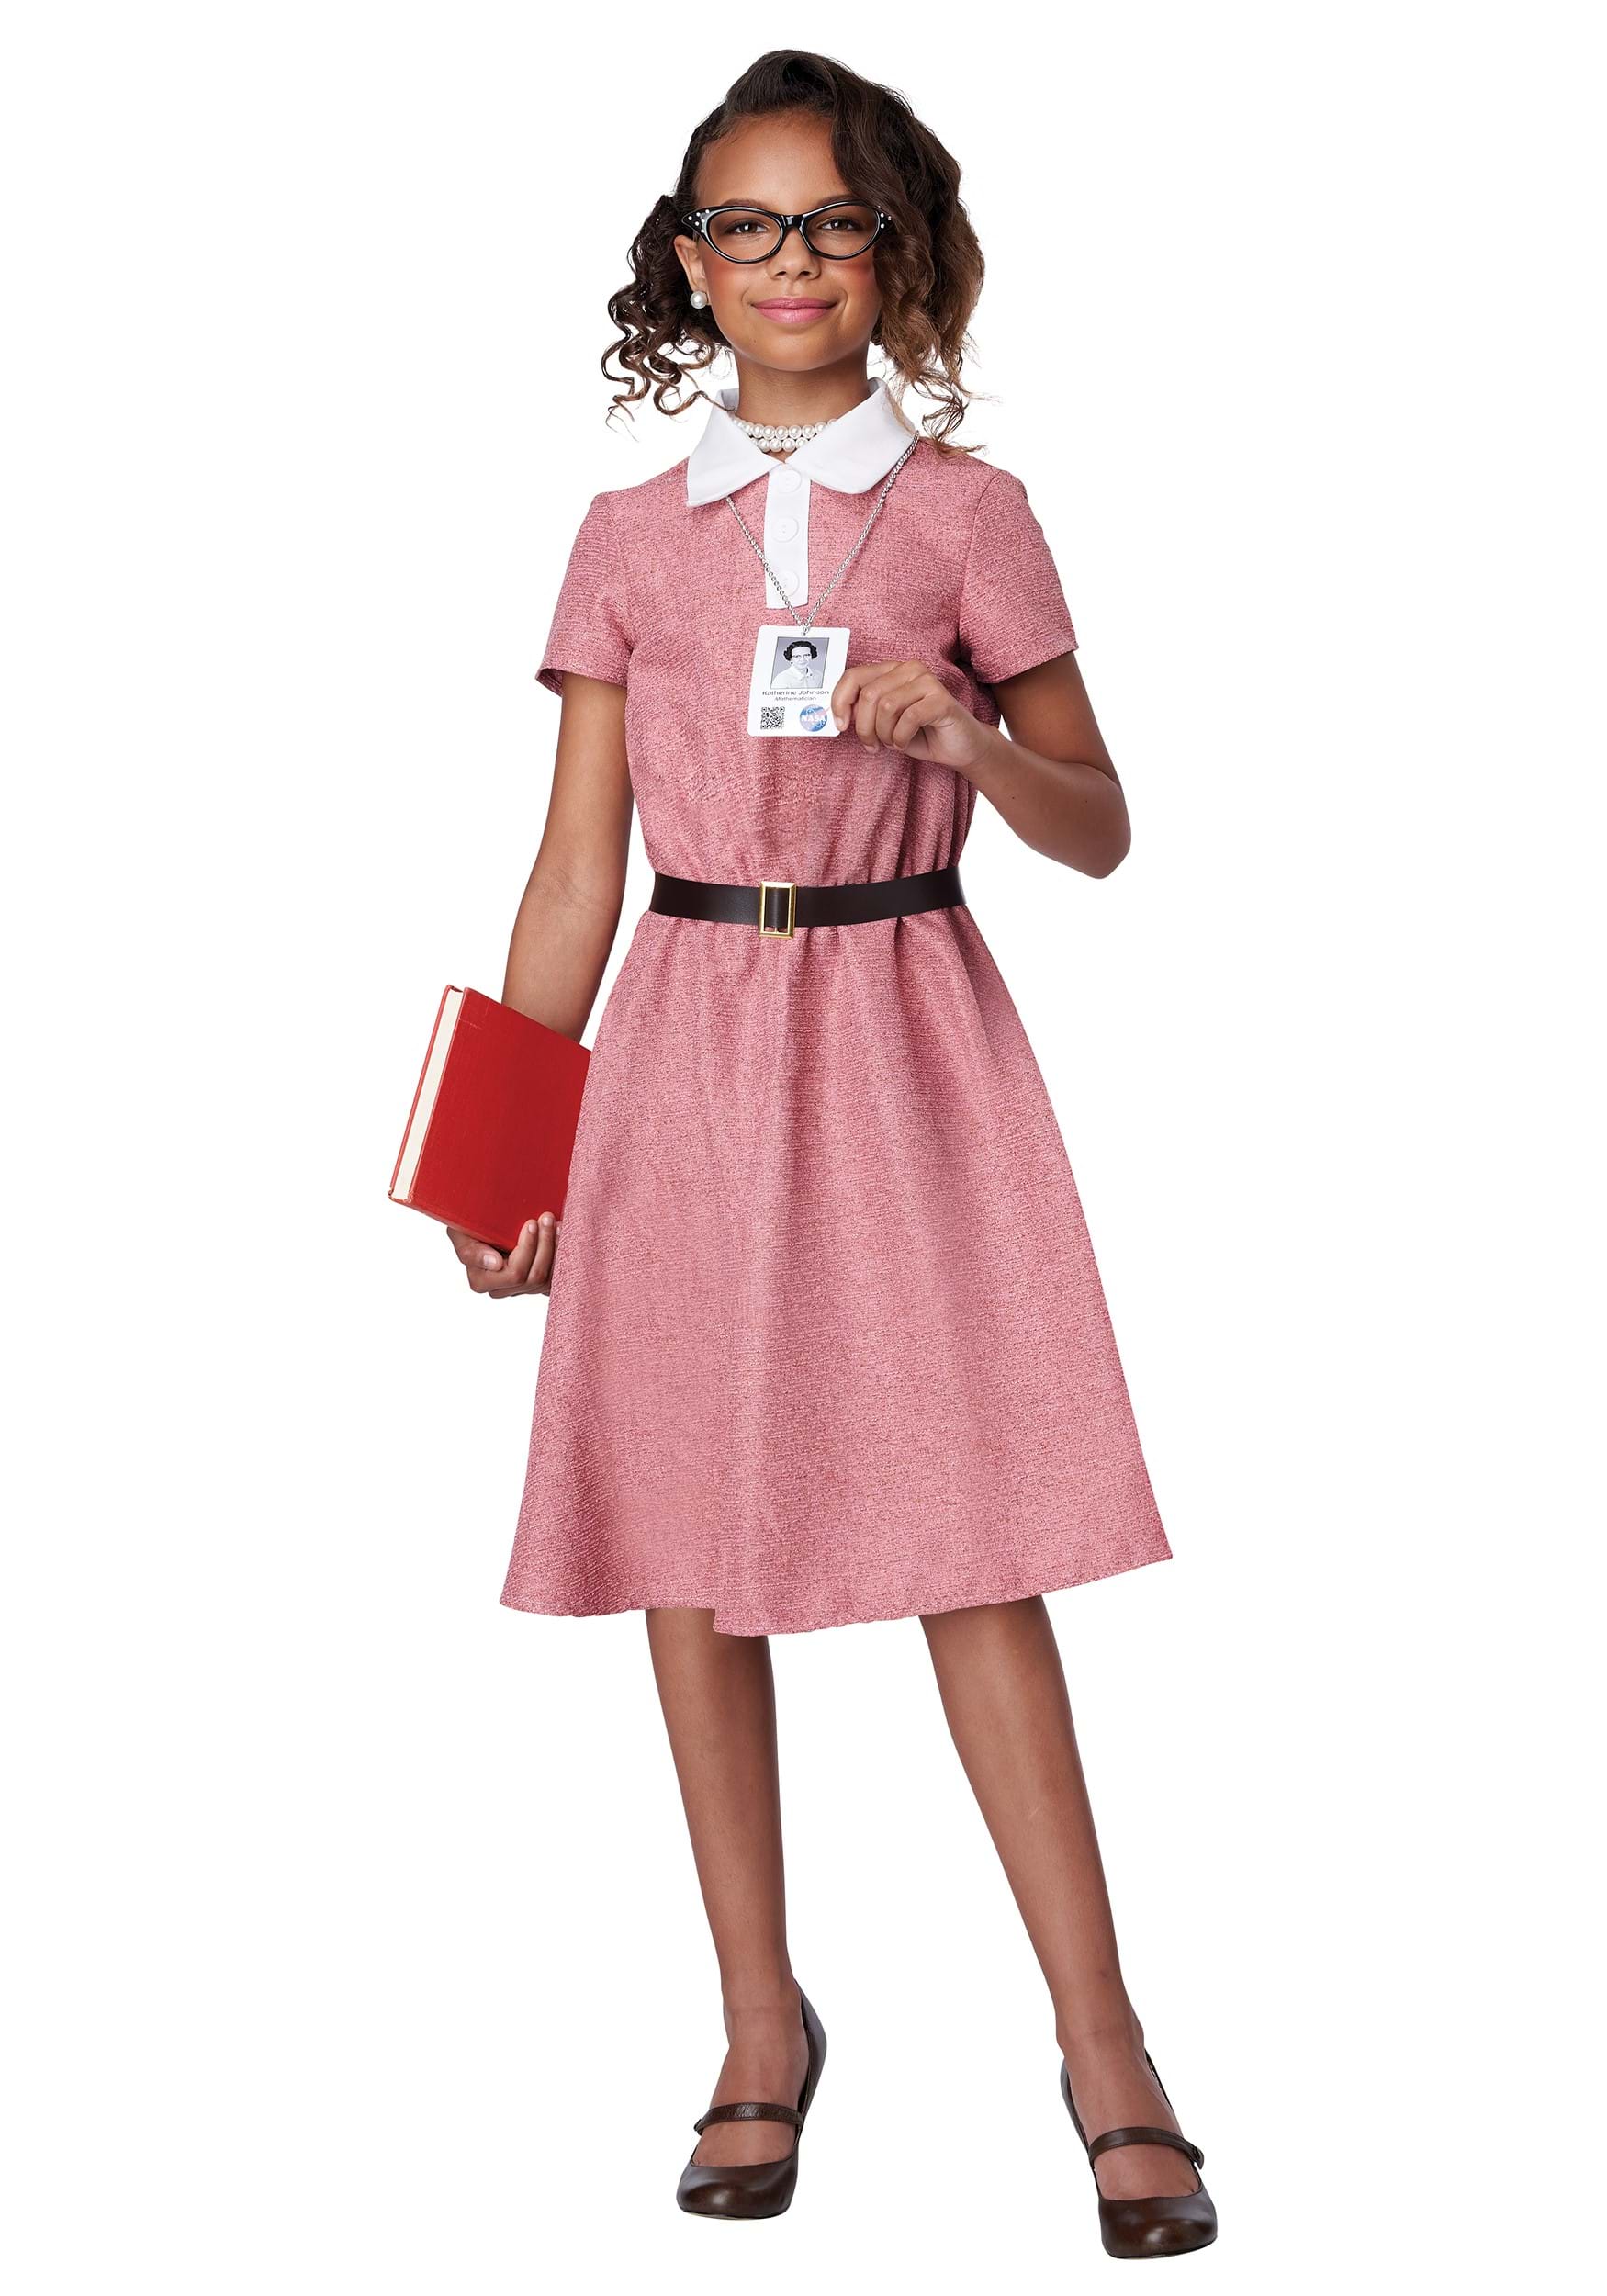 Aerospace Mathematician Child Girls Costume | Girls Historical Costumes